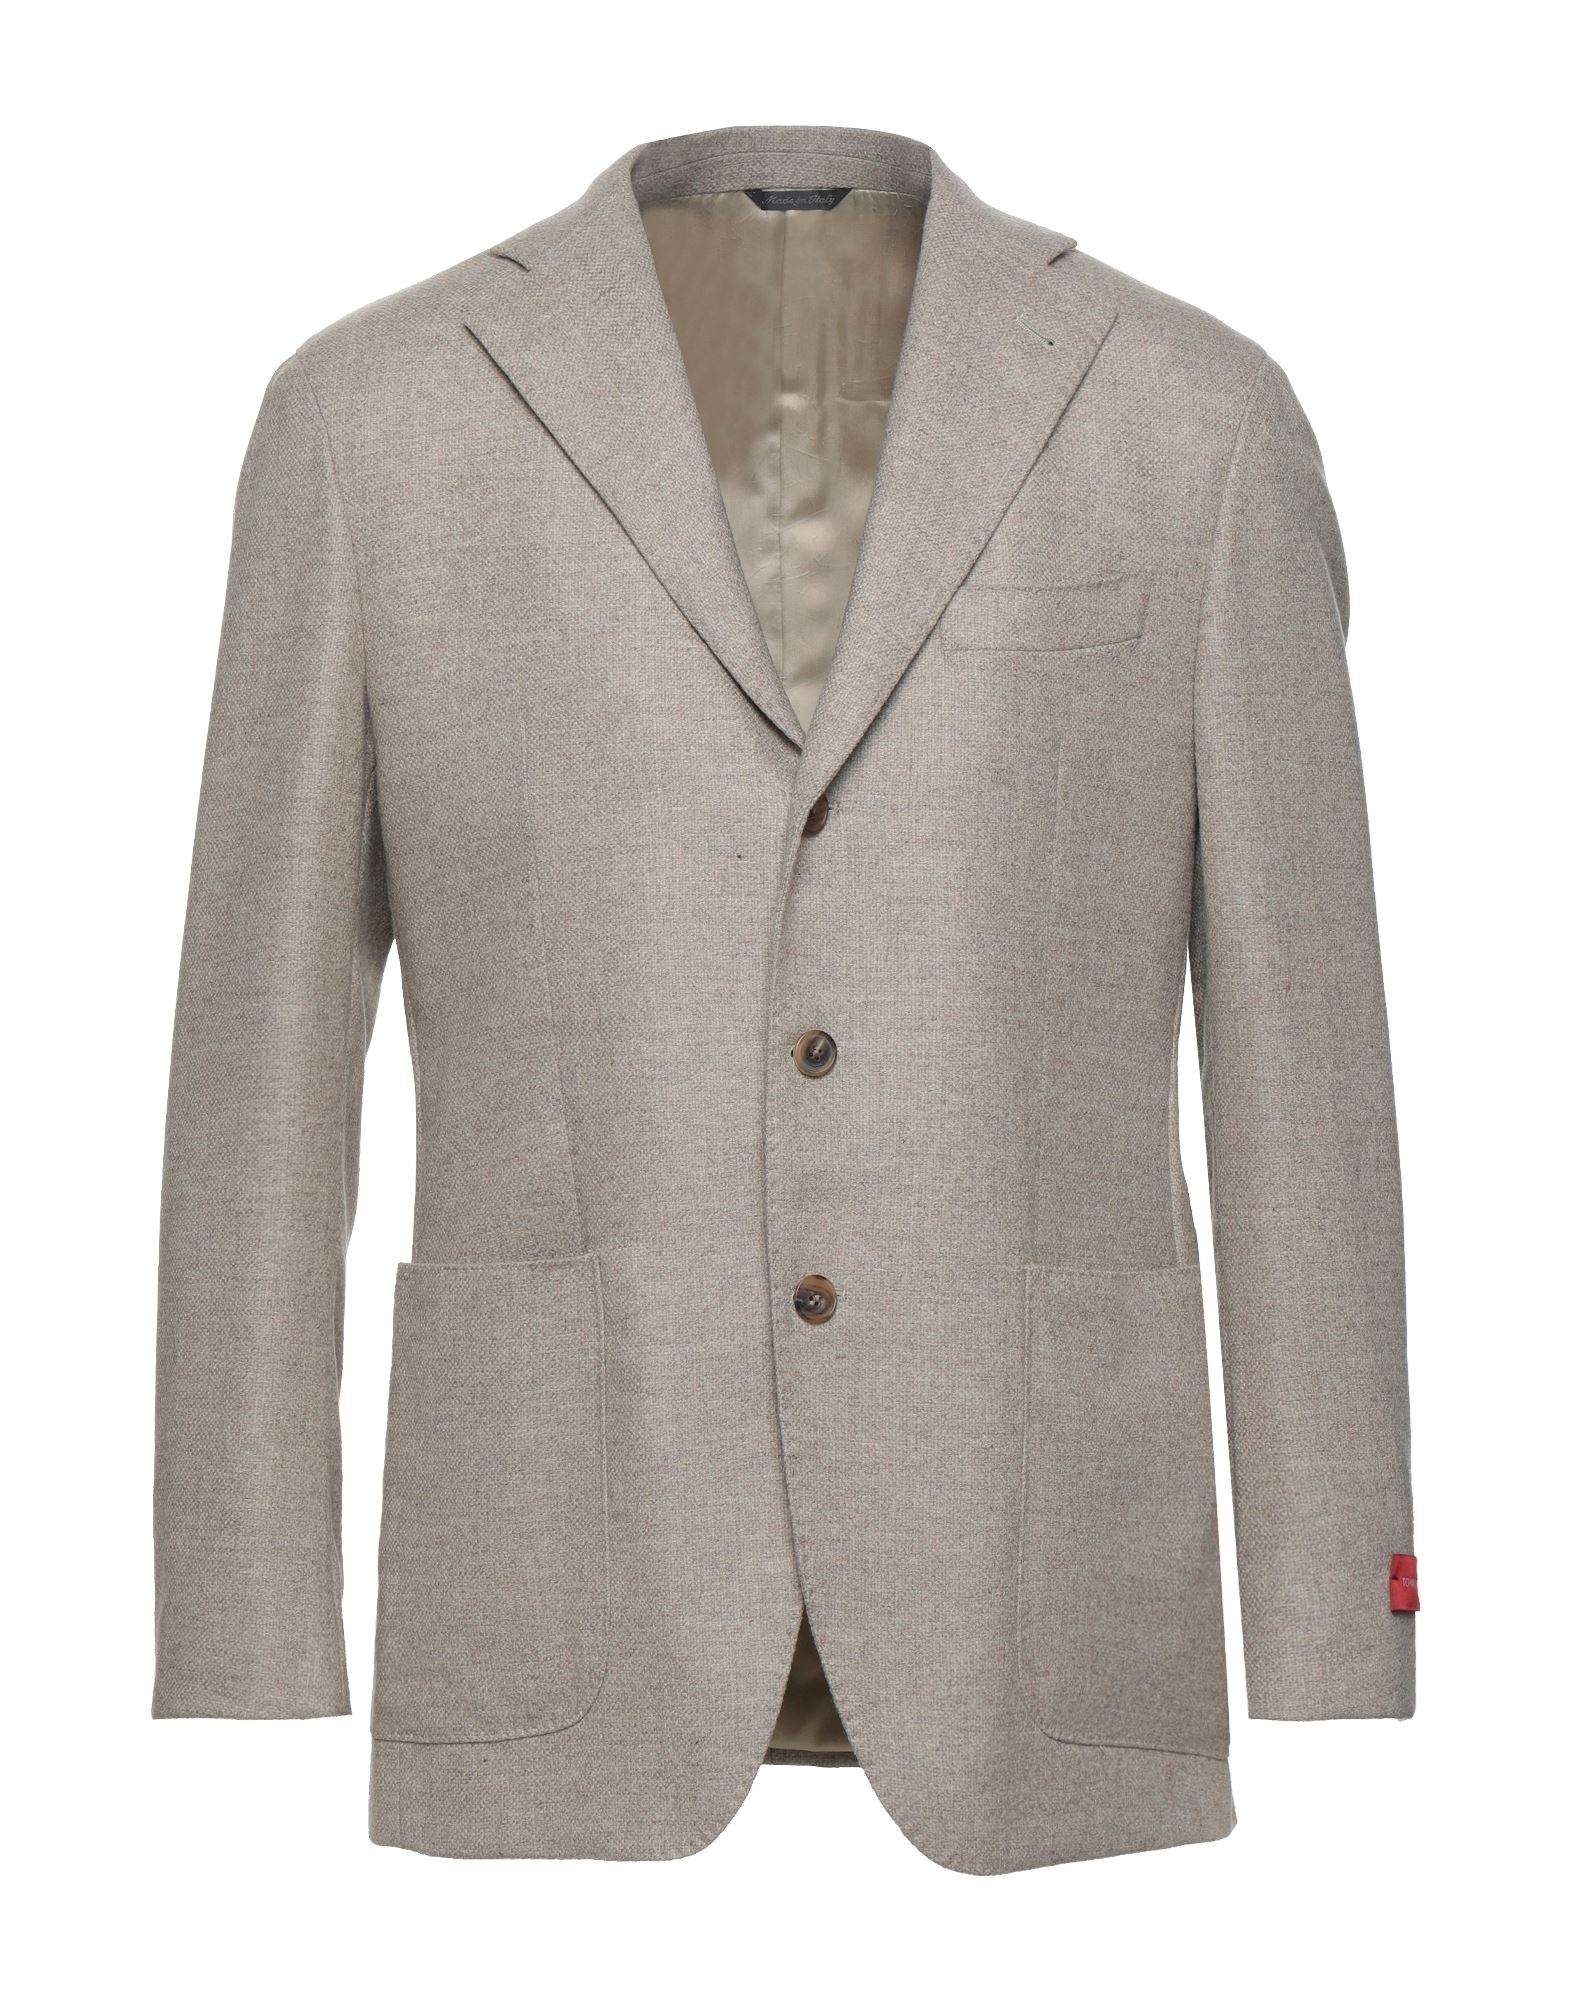 TOMBOLINI Suit jackets | Smart Closet